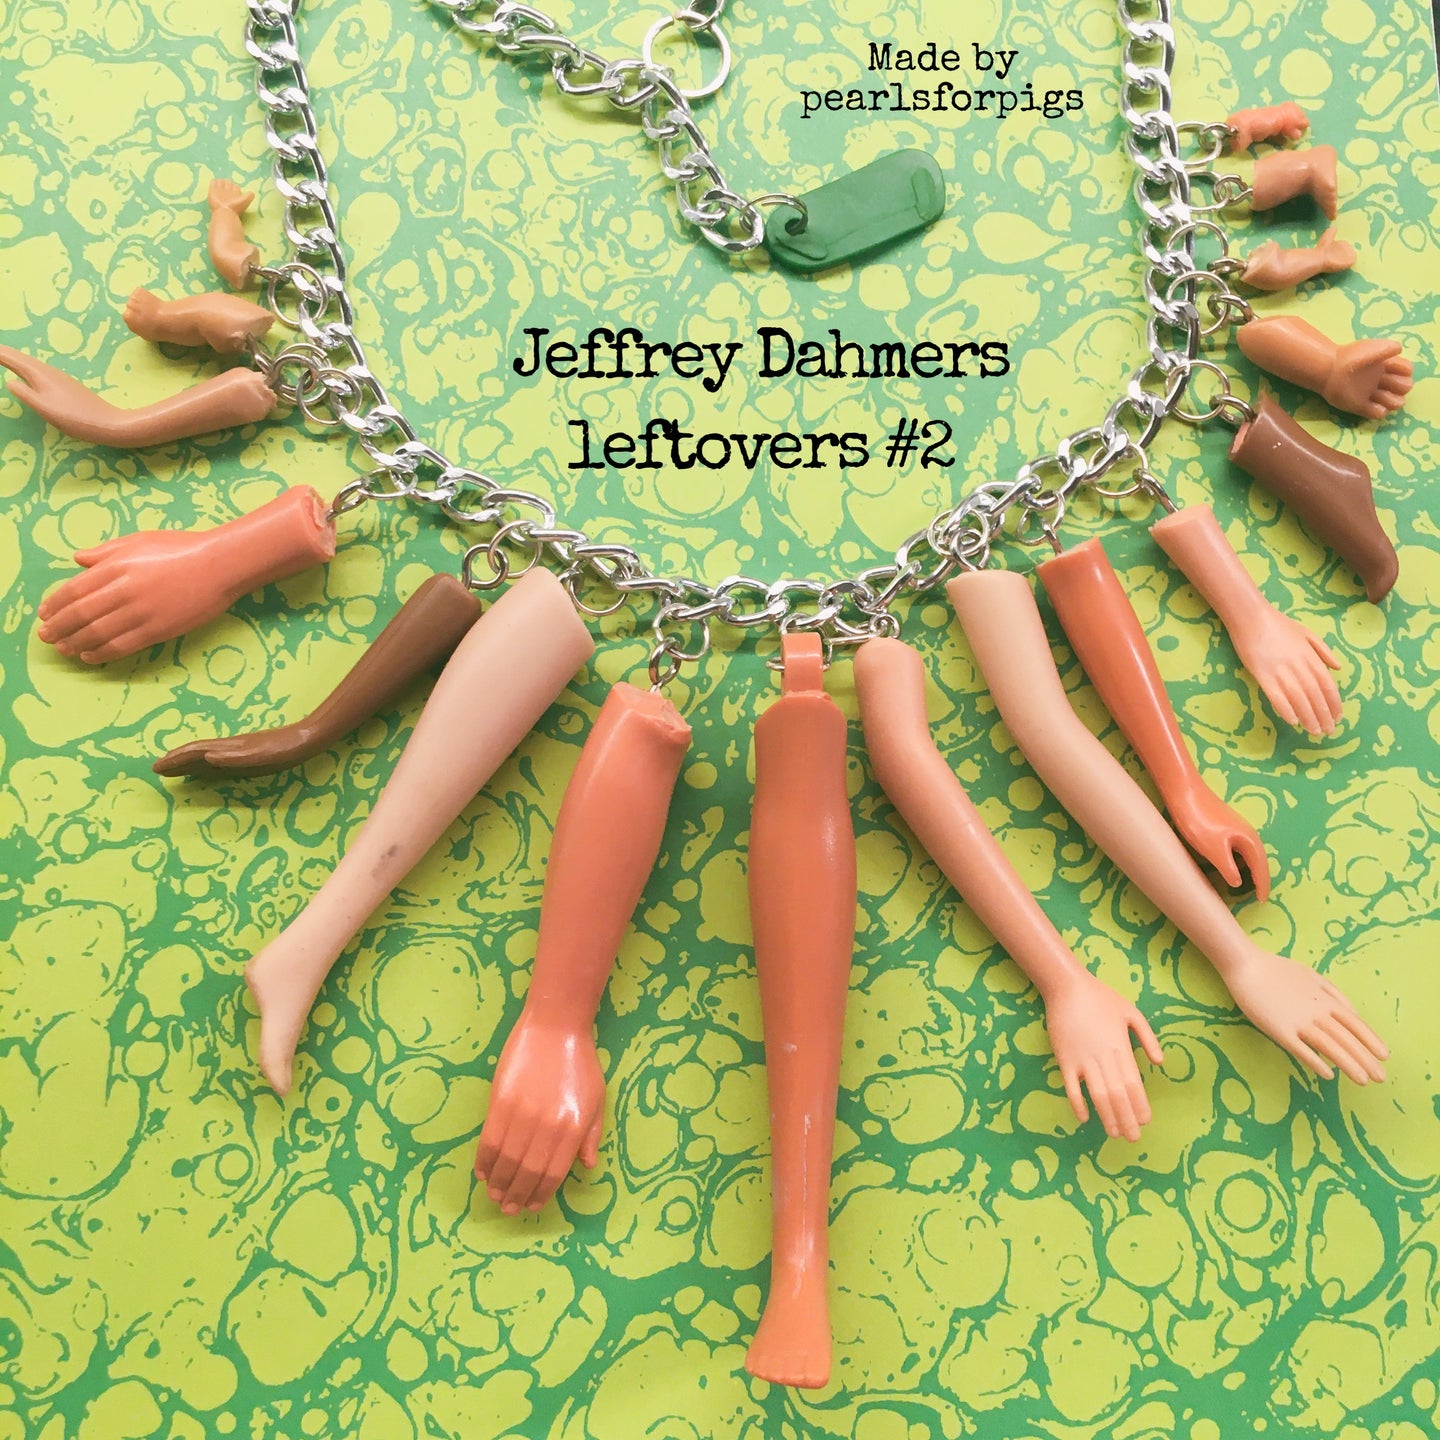 Jeffrey Dahmers leftovers #2